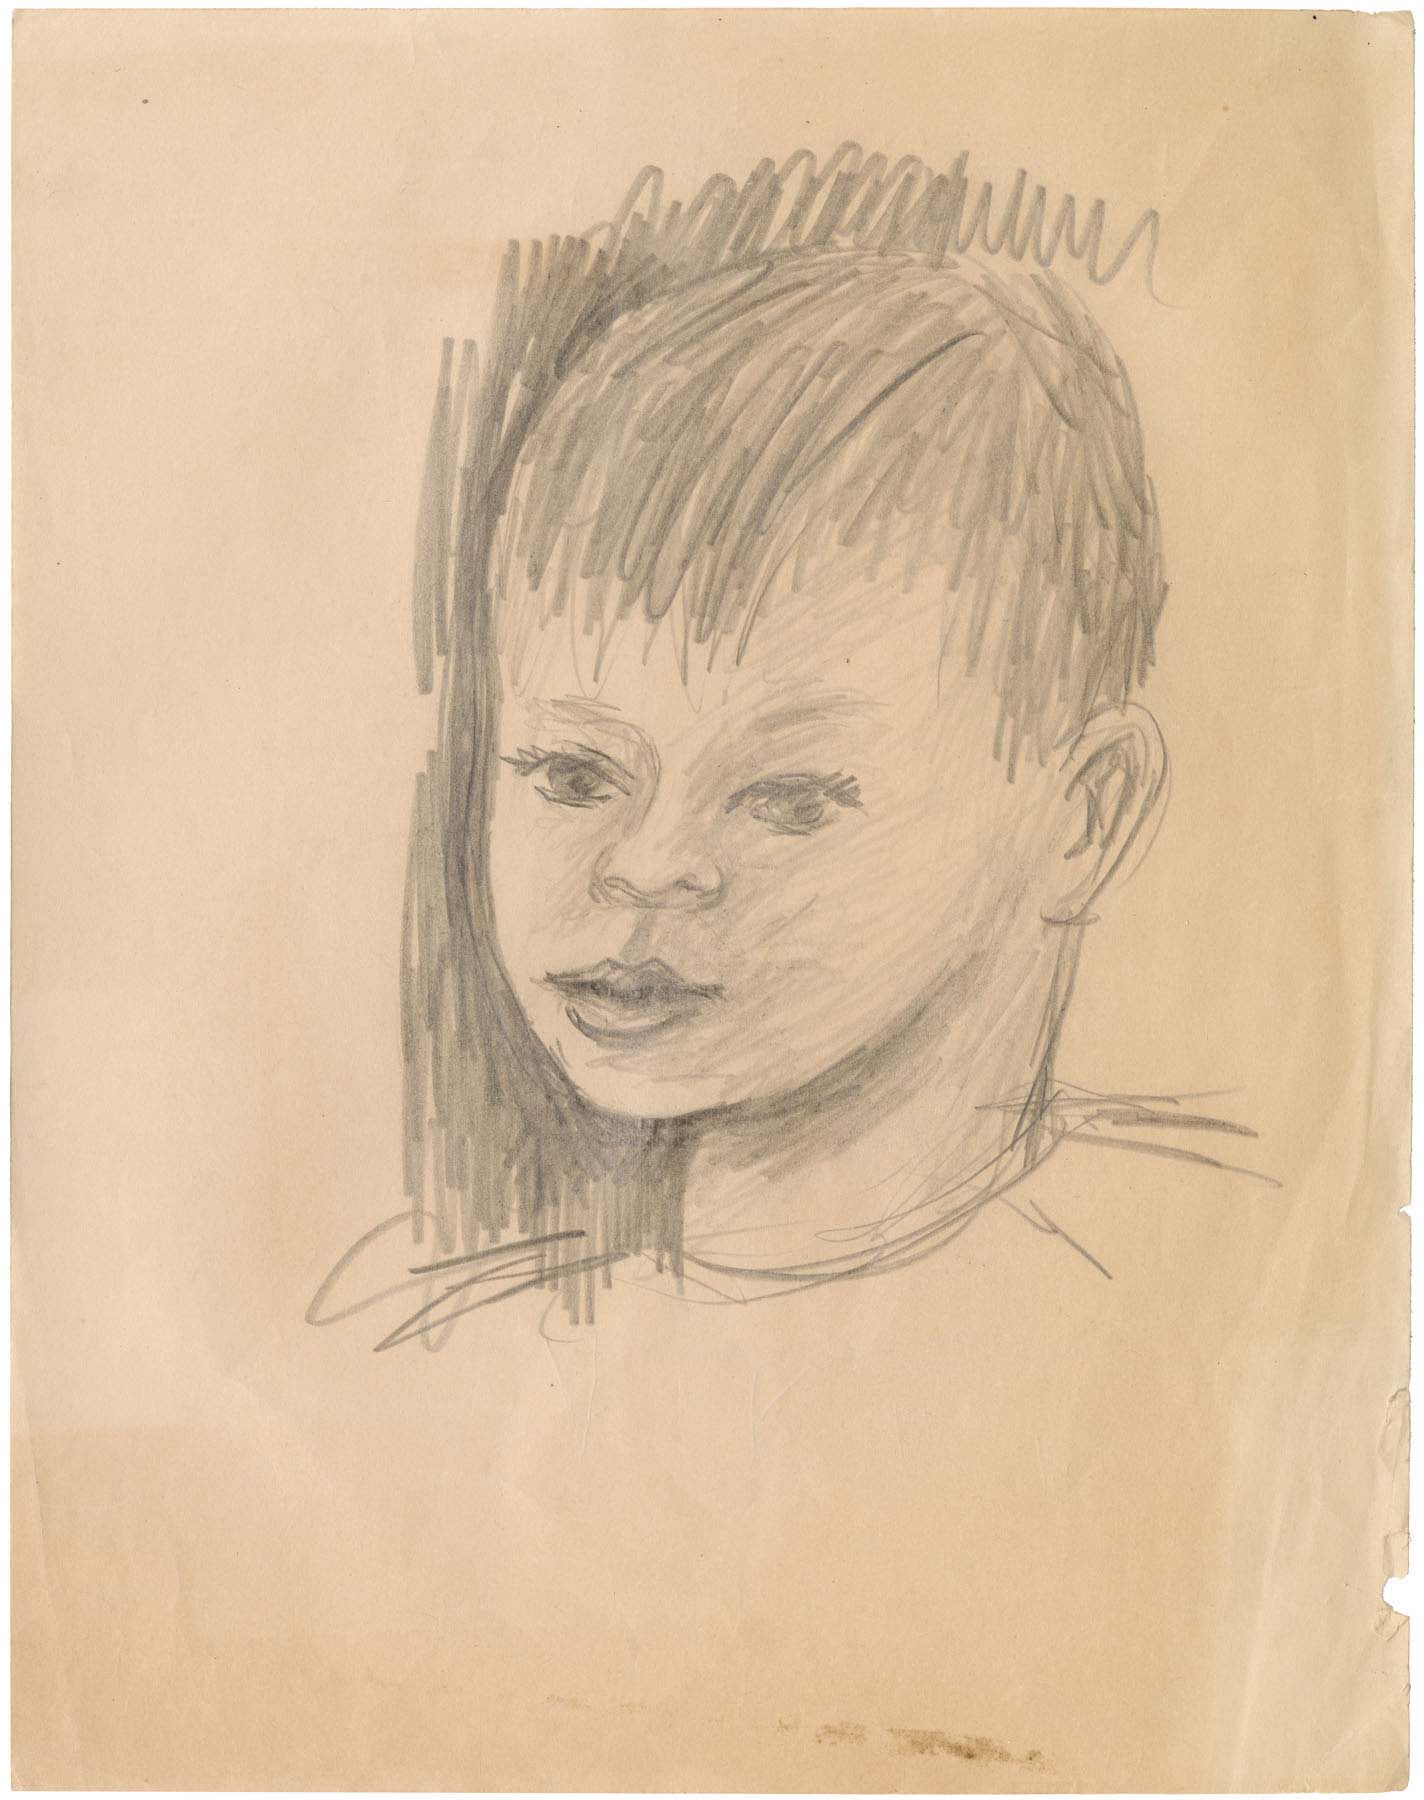 A pencil-drawn portrait of a child, Karl Williams.